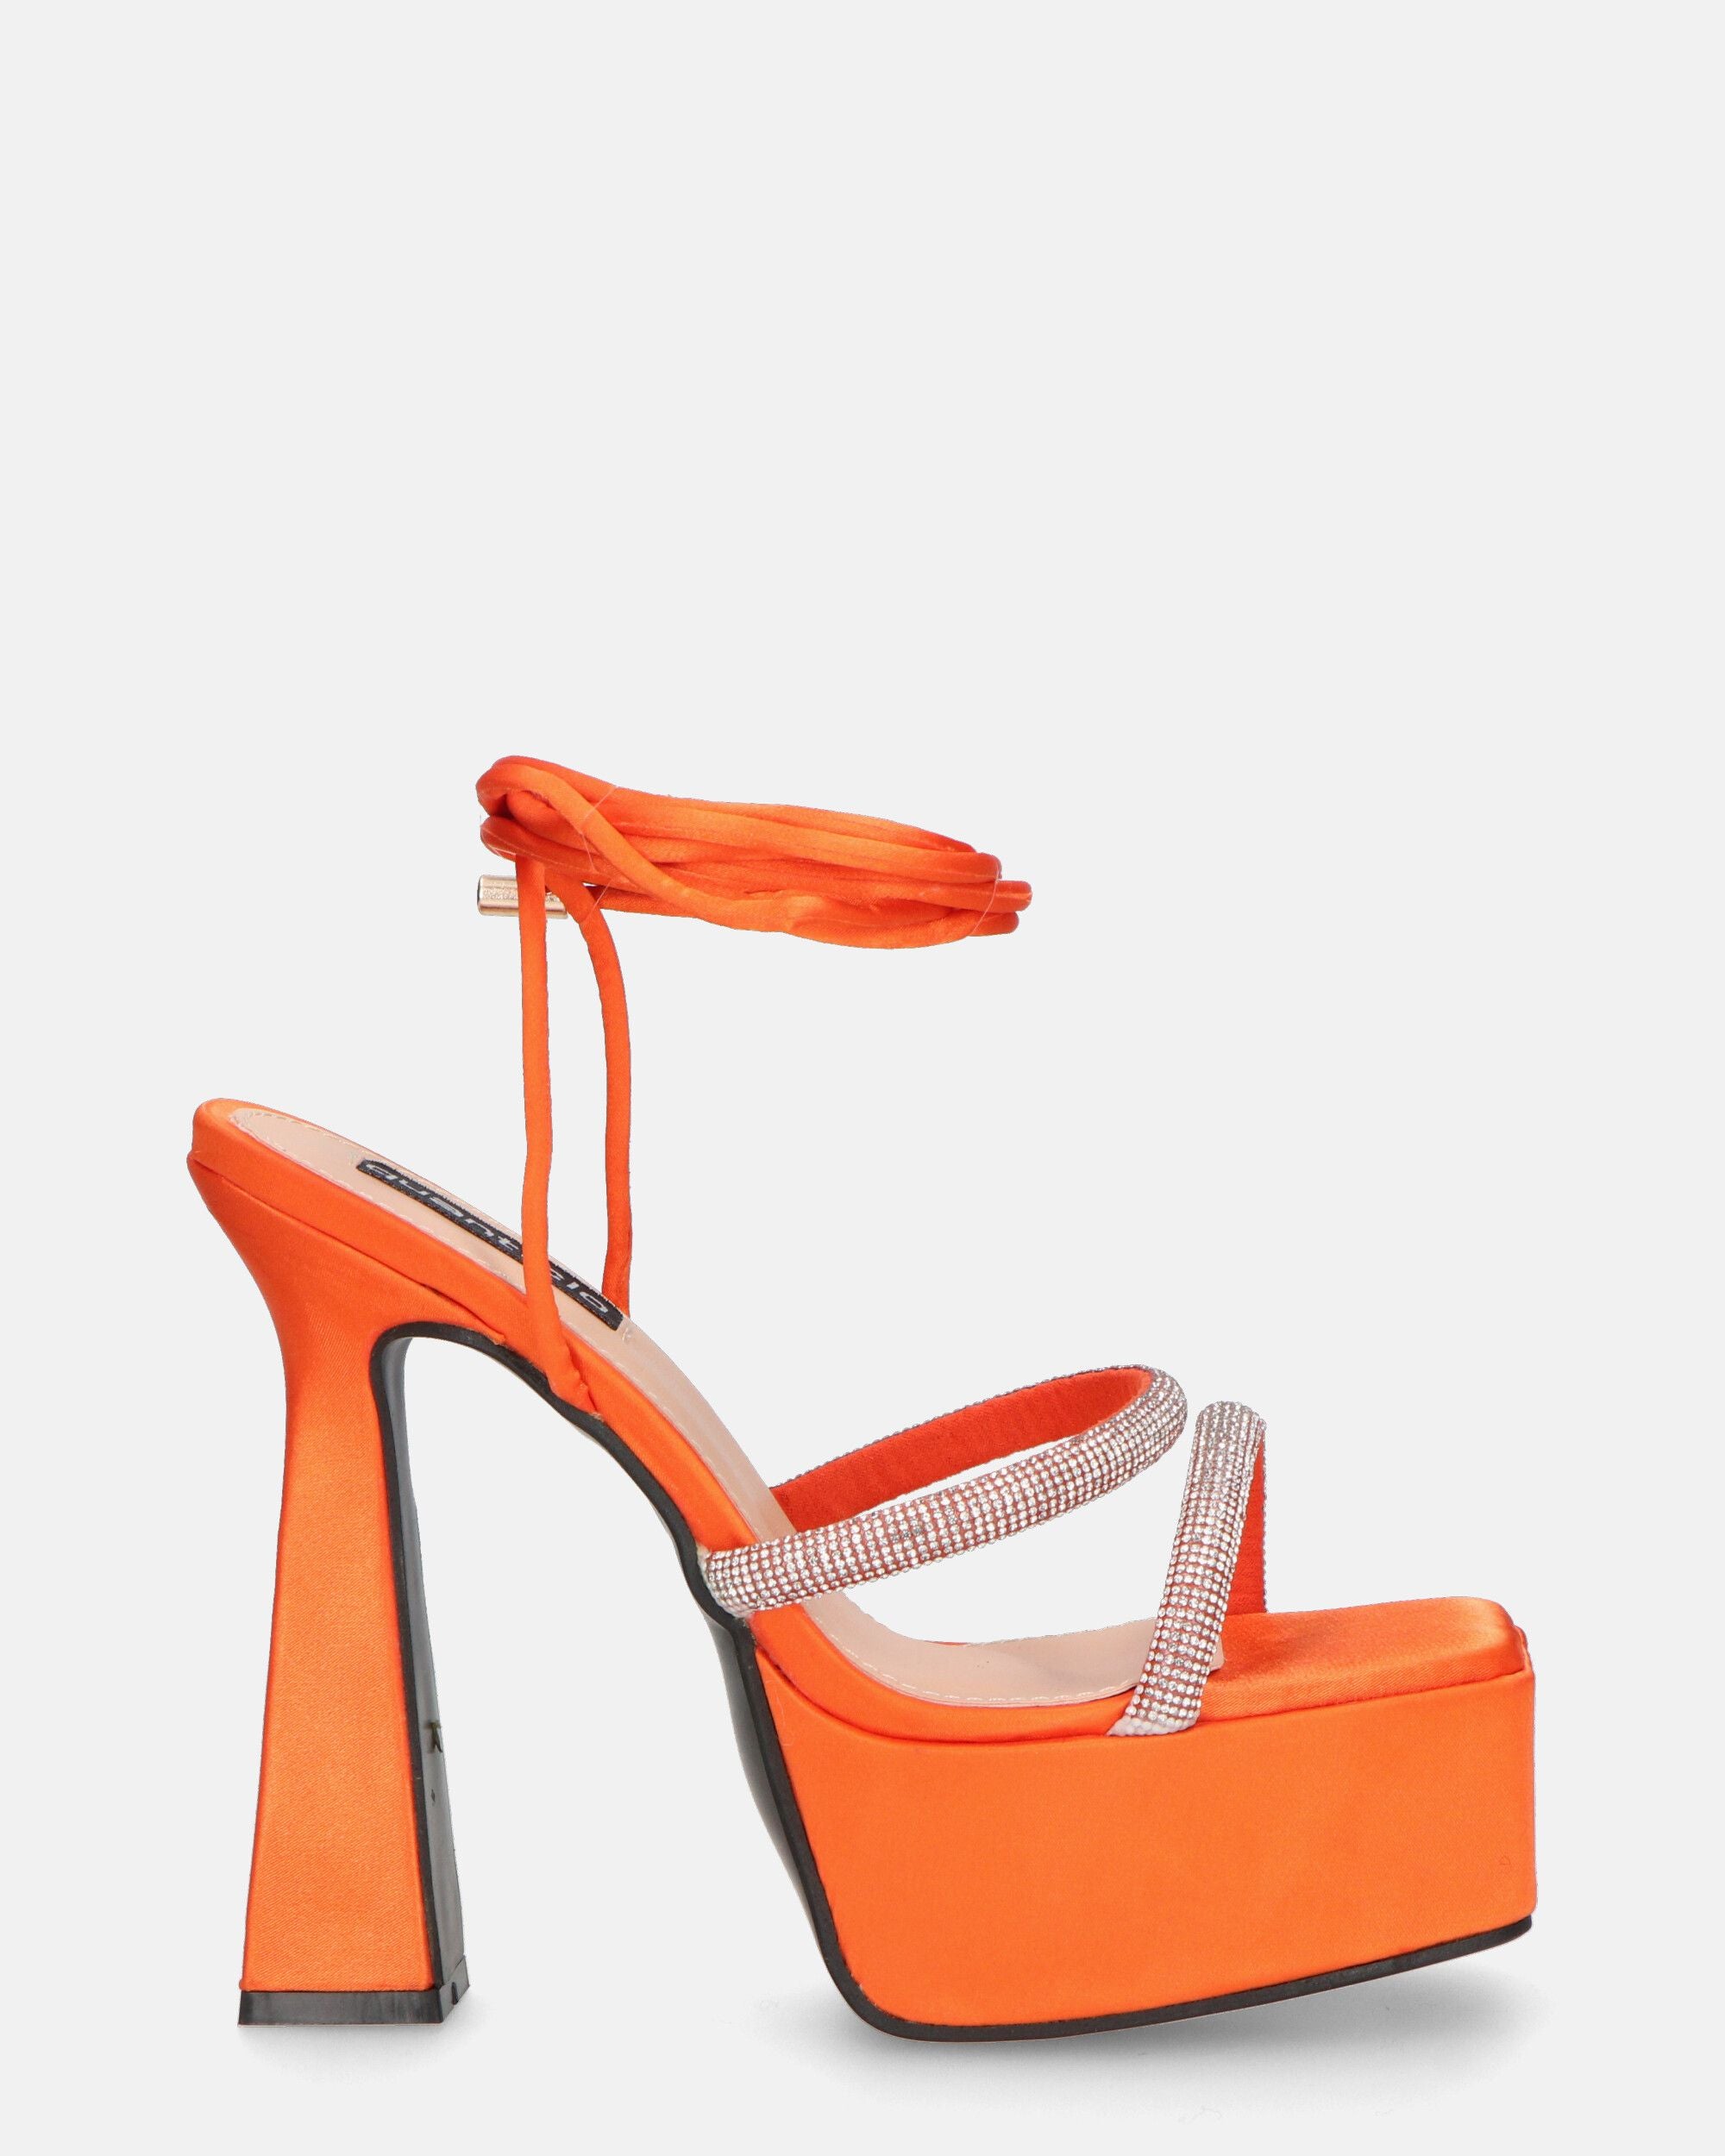 BIRGIT - sandali il satin arancione con gemme